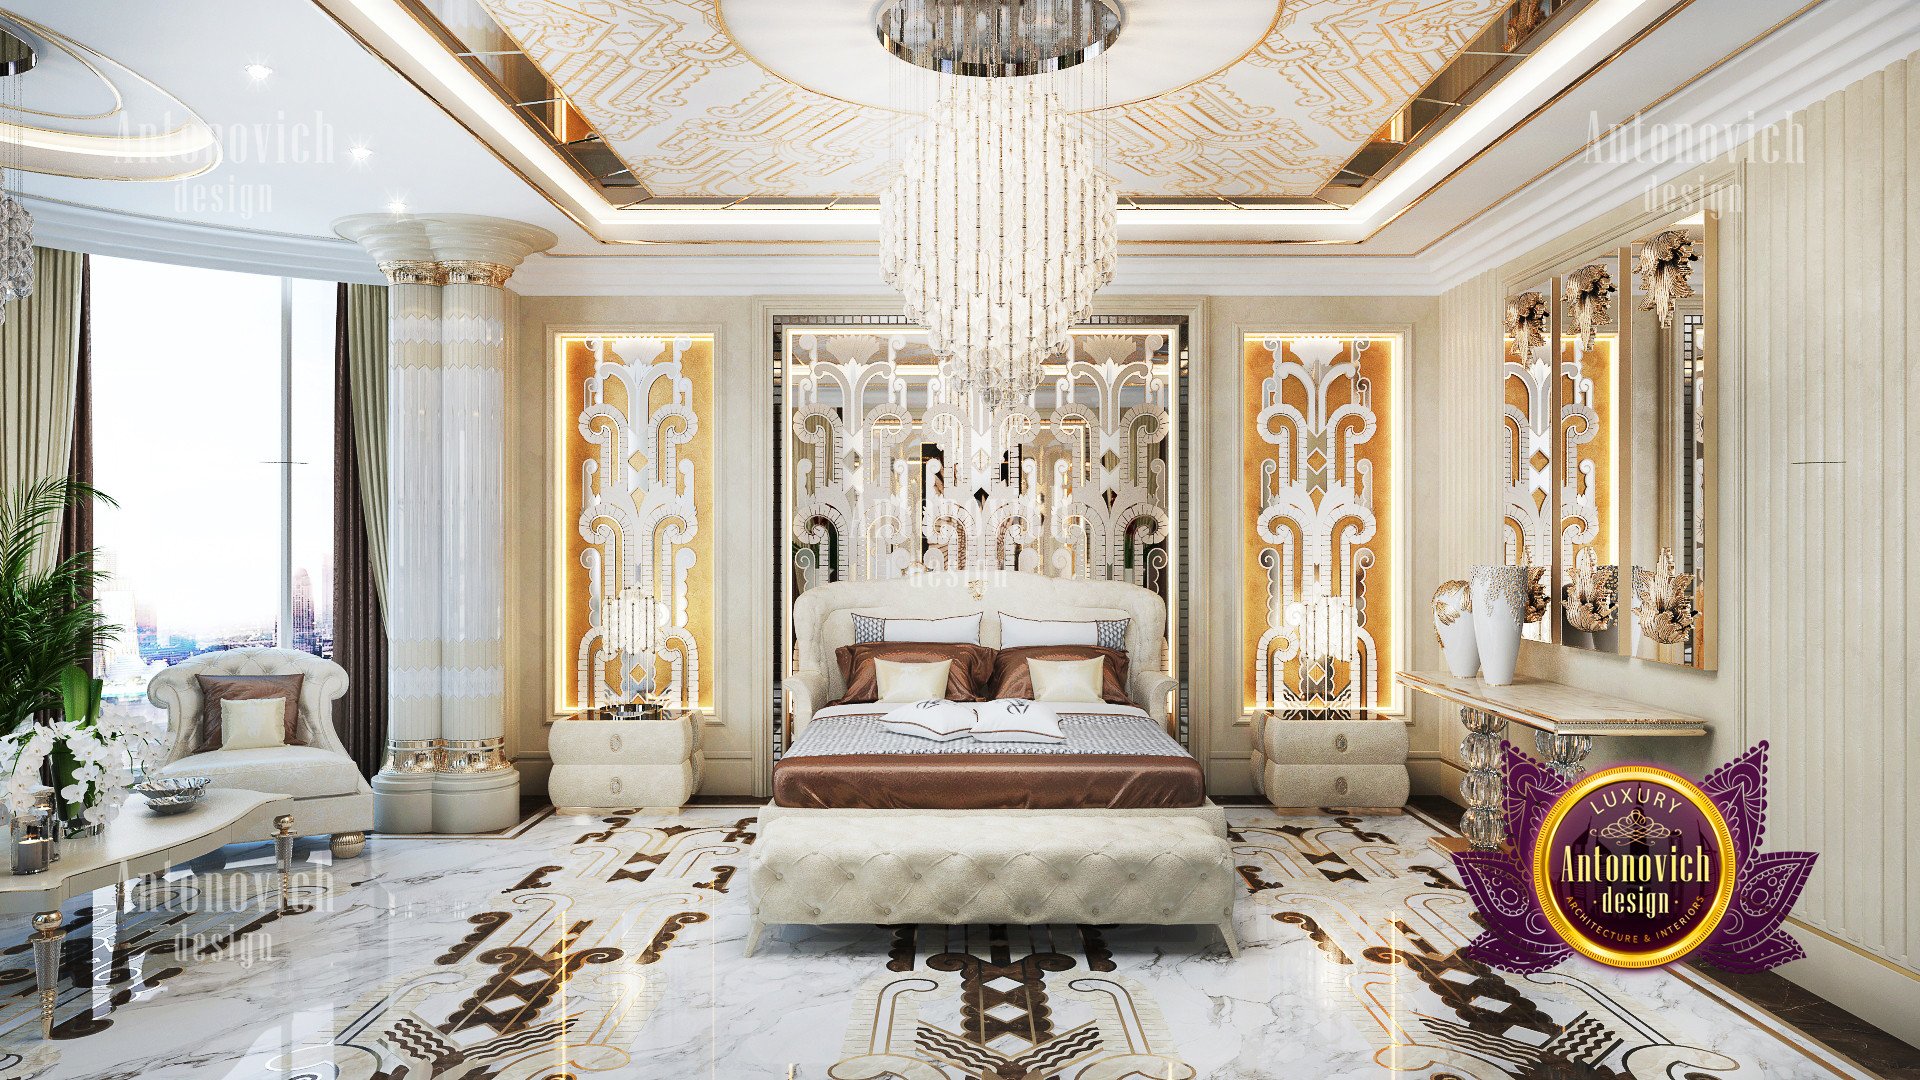 Modern Luxury bedroom decor - luxury interior design ...